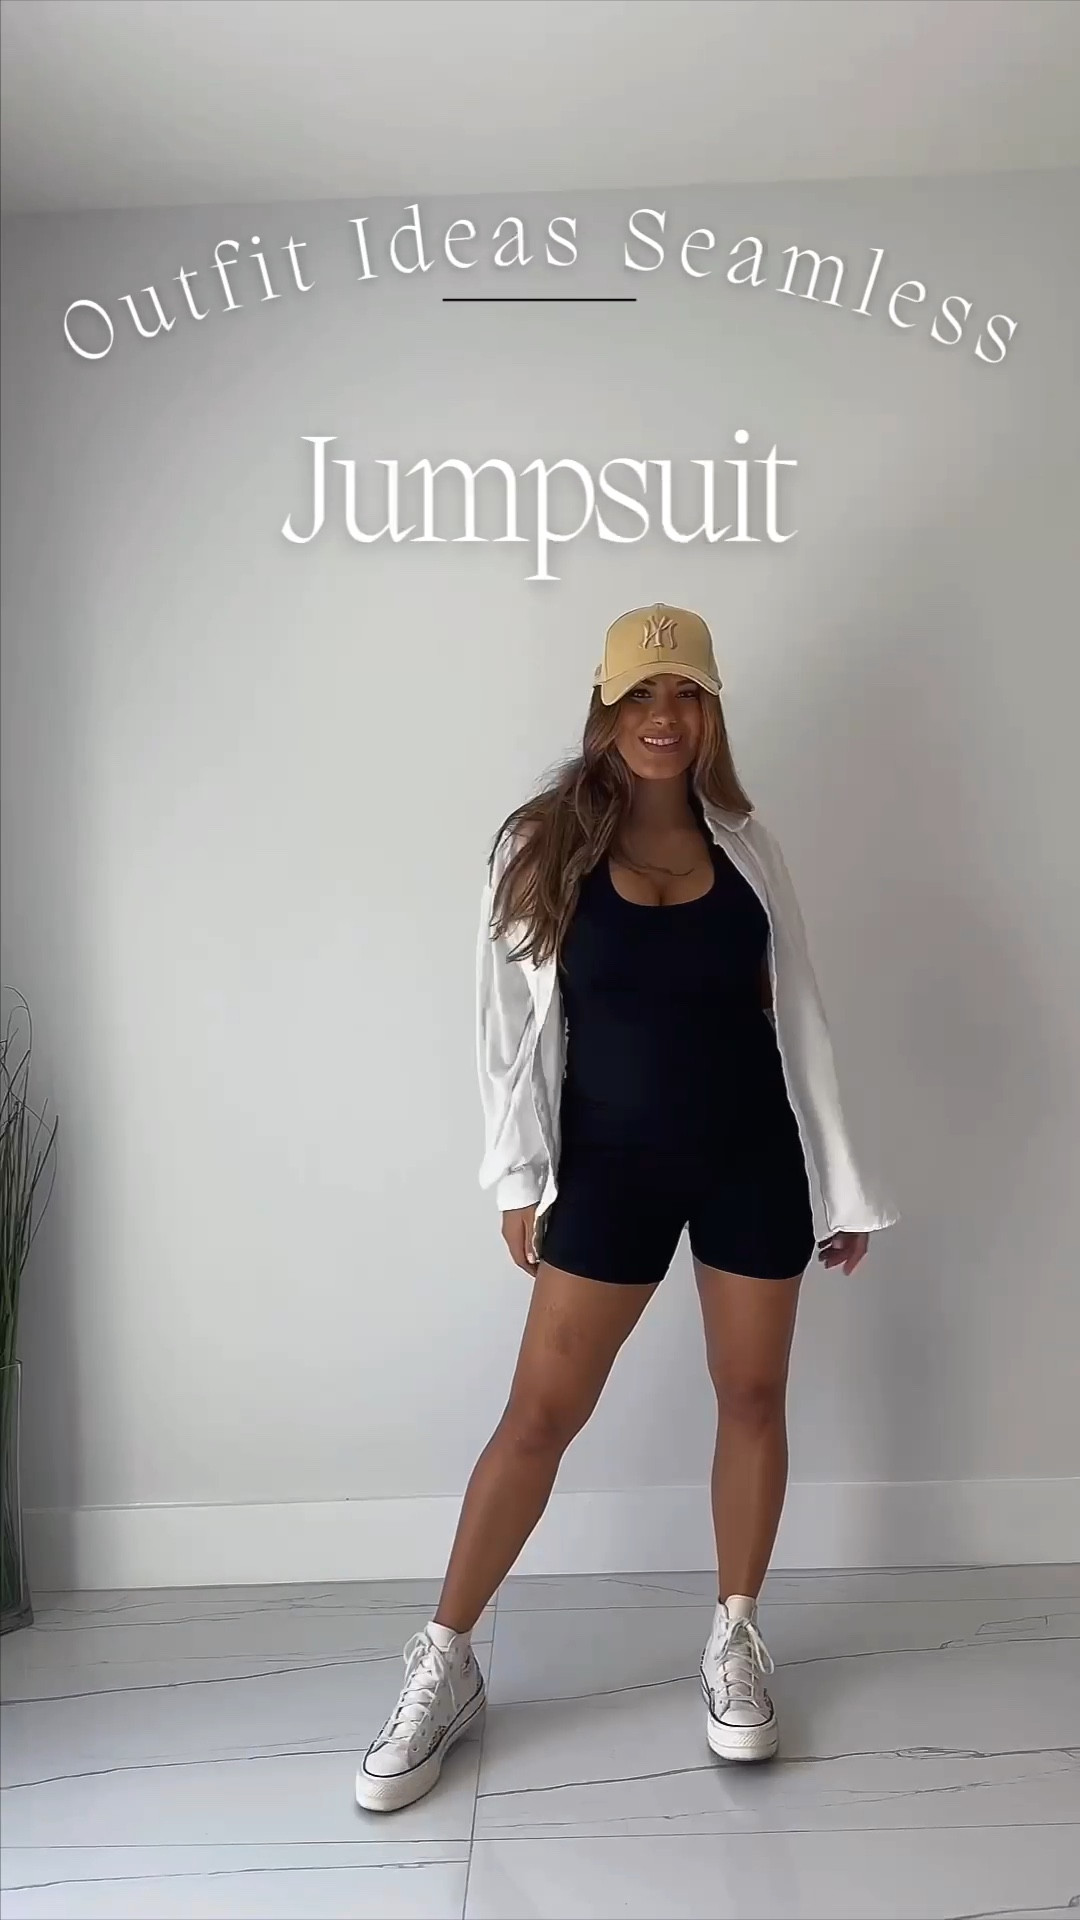 Sleeveless seamless jumpsuit - Dresses - Women